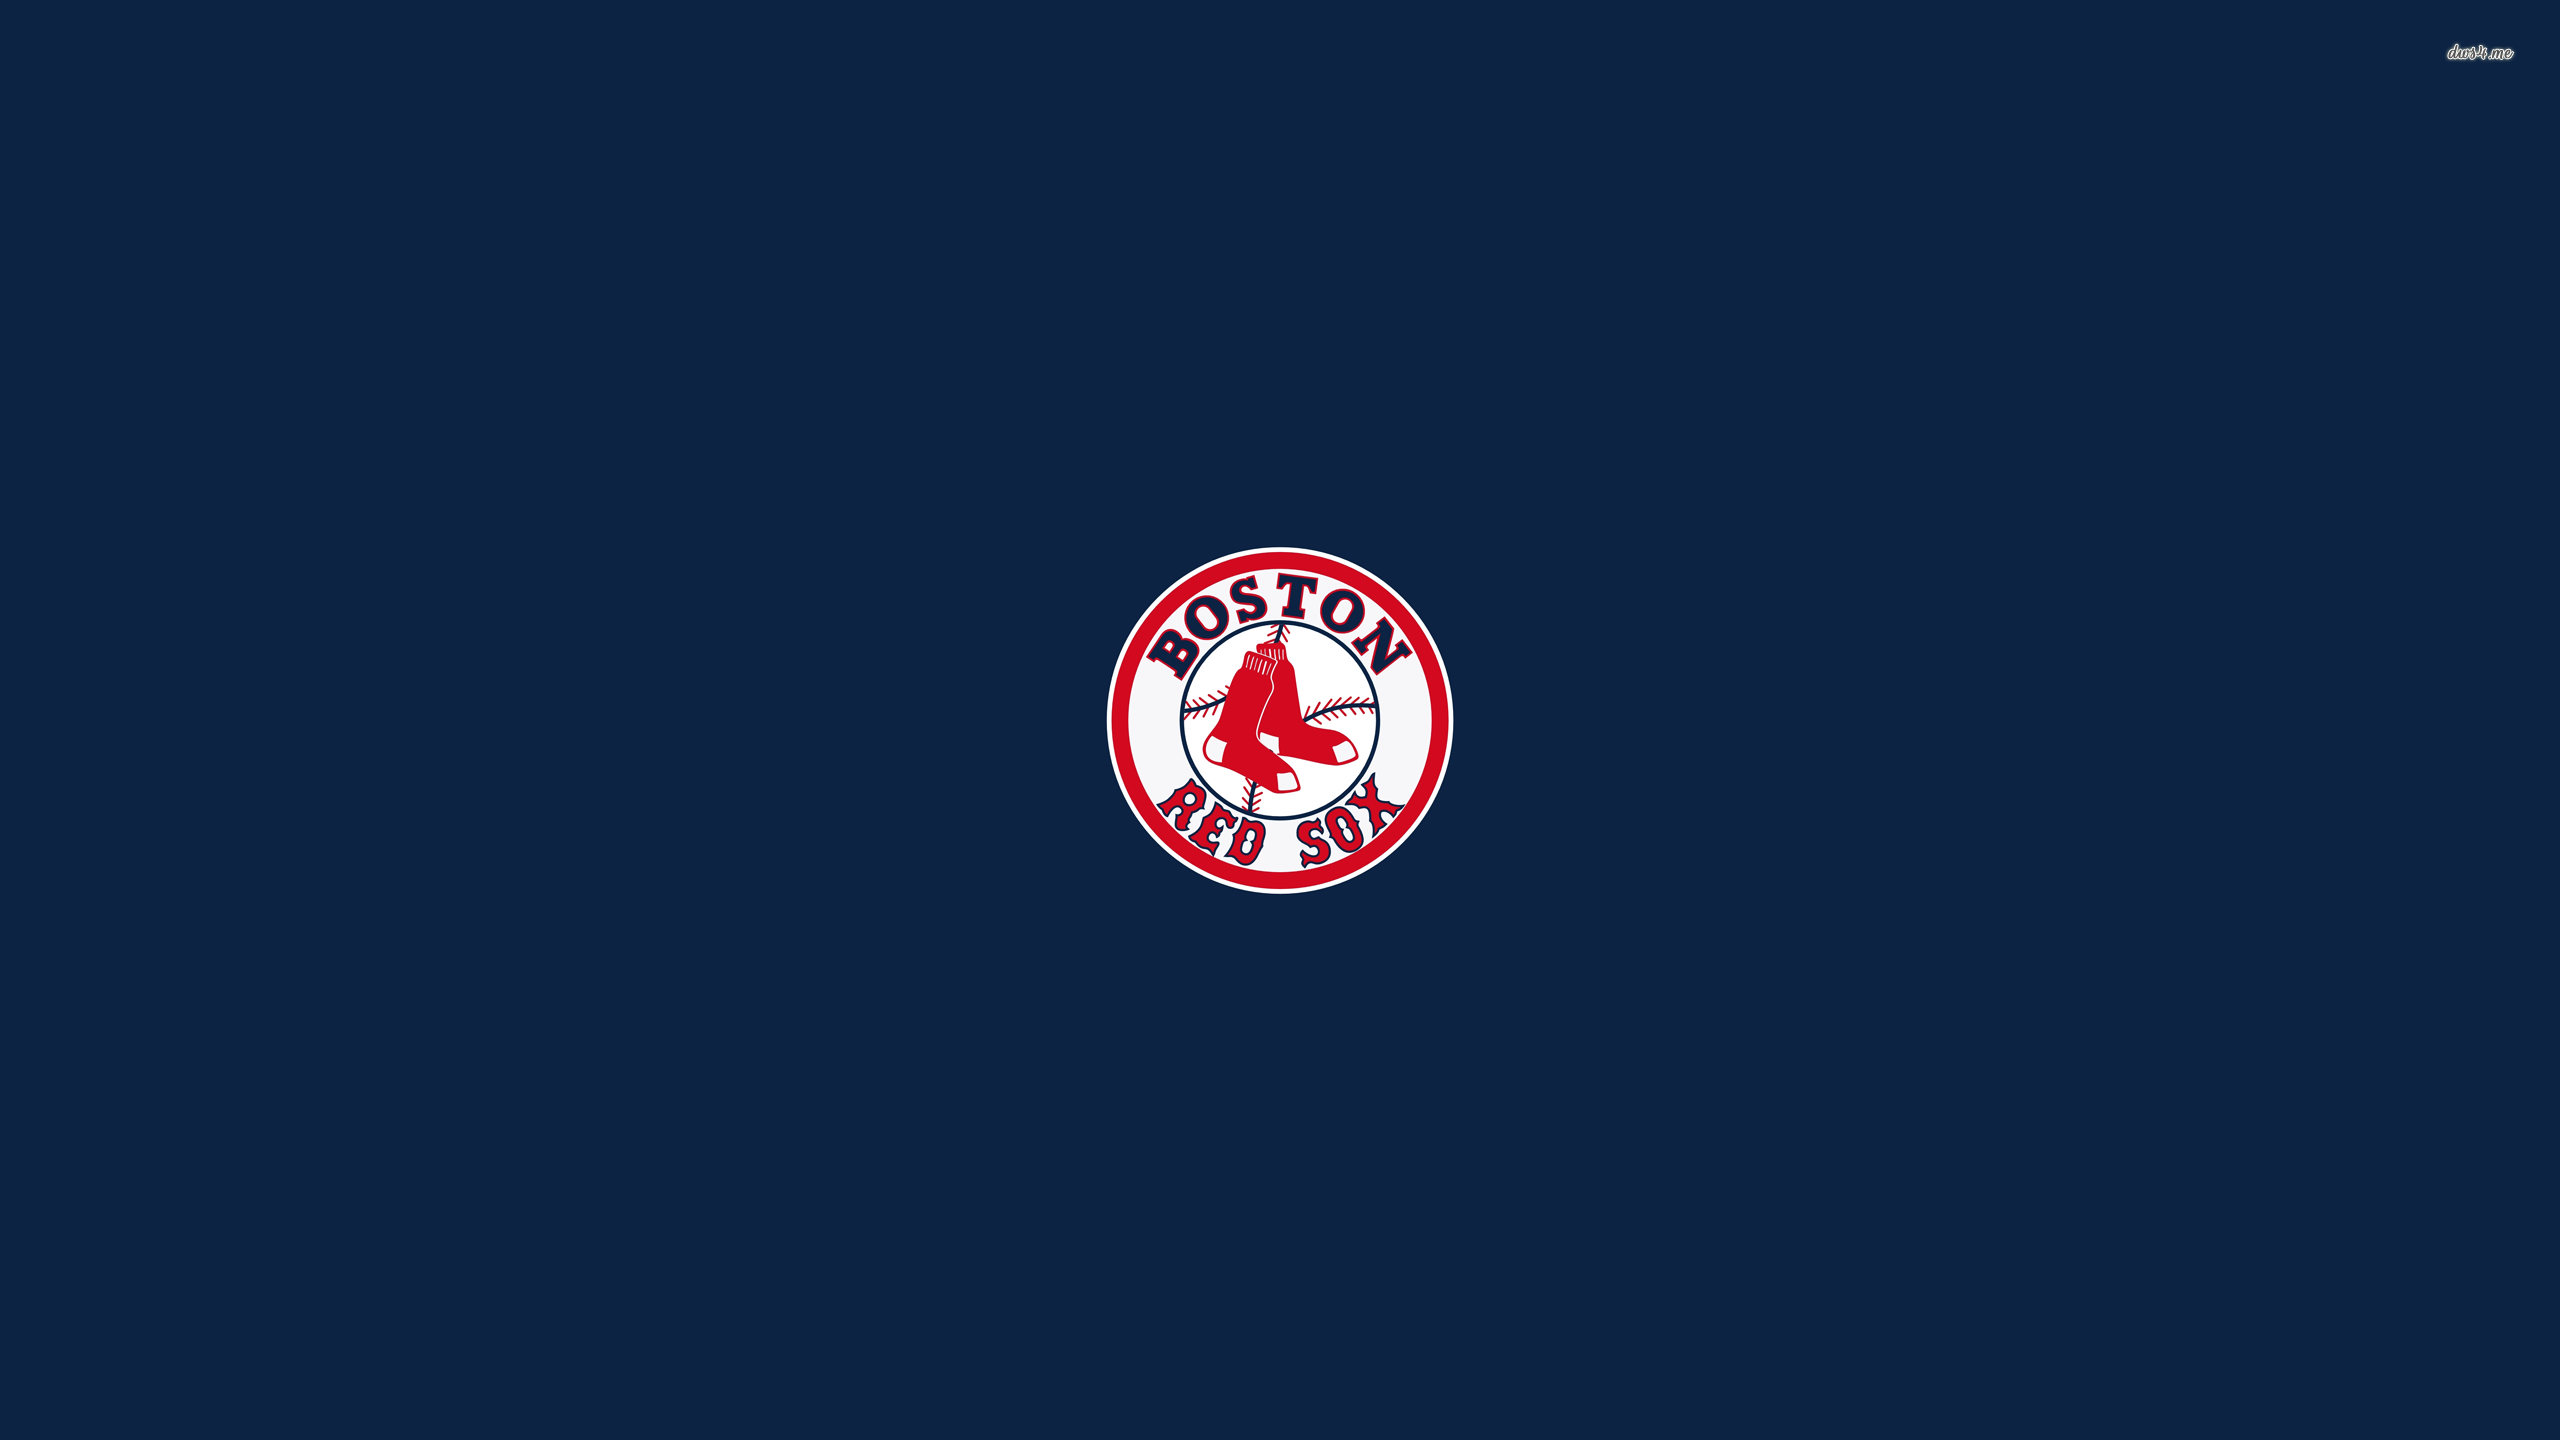 Boston Red Sox Wallpaper Sport